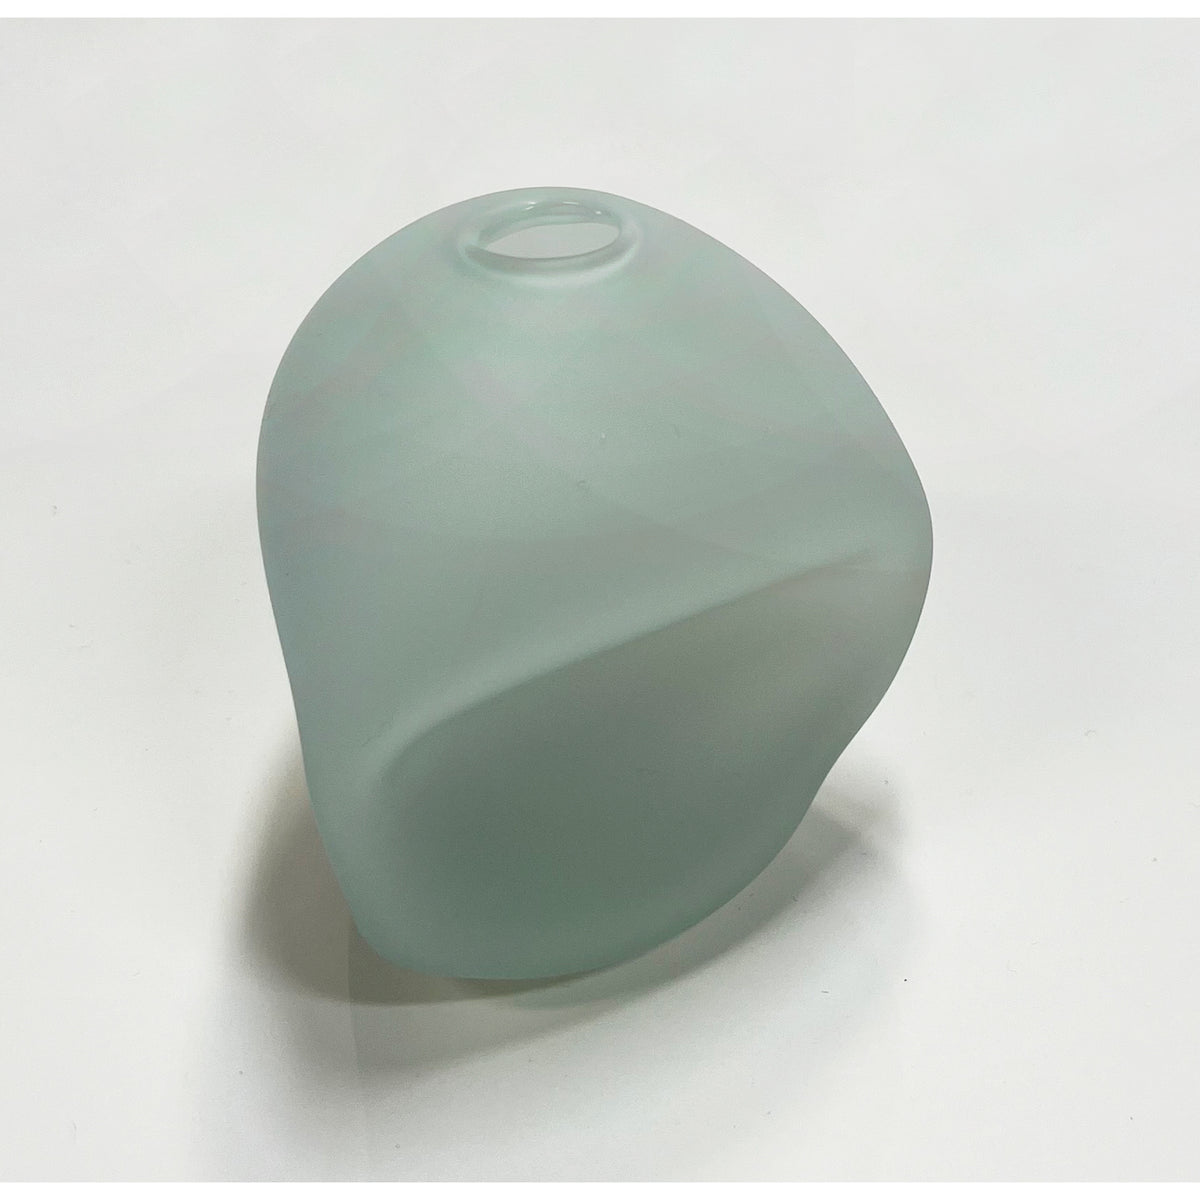 Goodbeast Design - Small Jade Pebble Vase, 4" x 4" x 4"